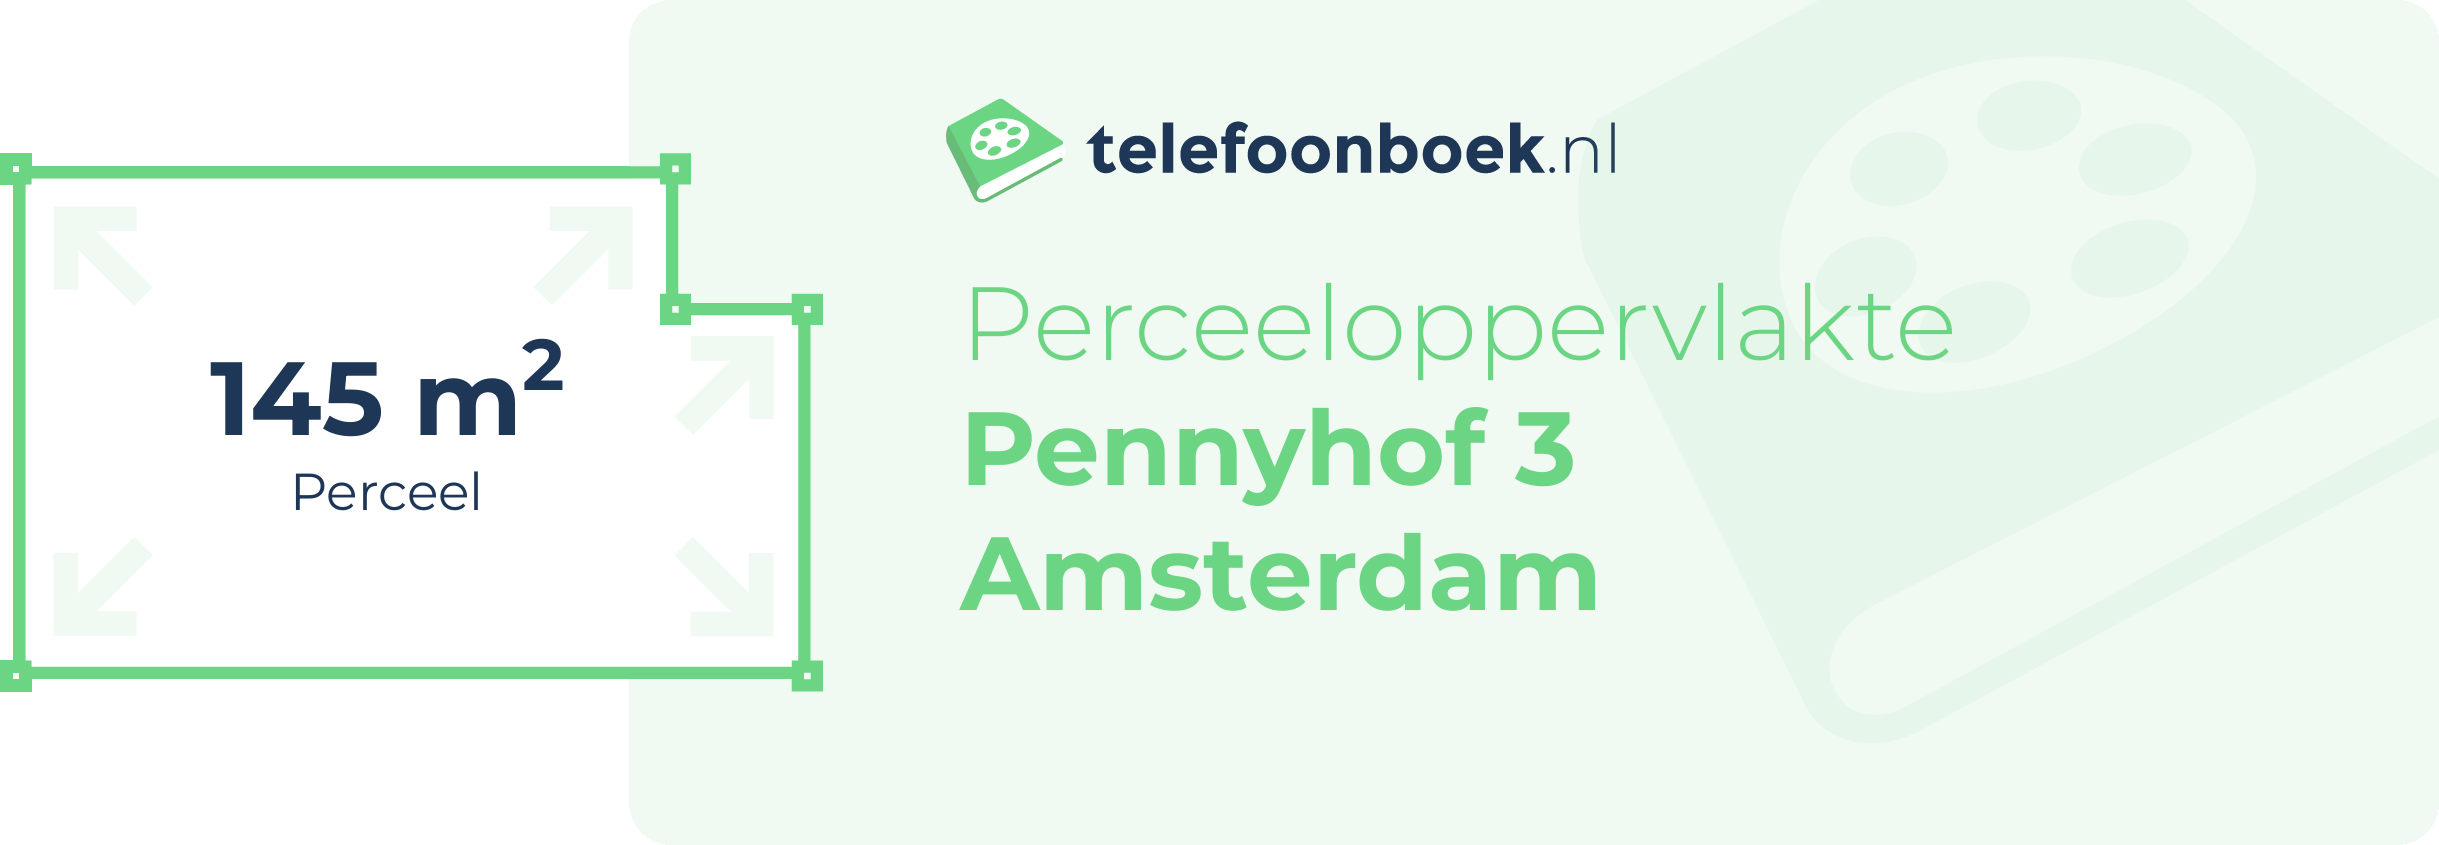 Perceeloppervlakte Pennyhof 3 Amsterdam